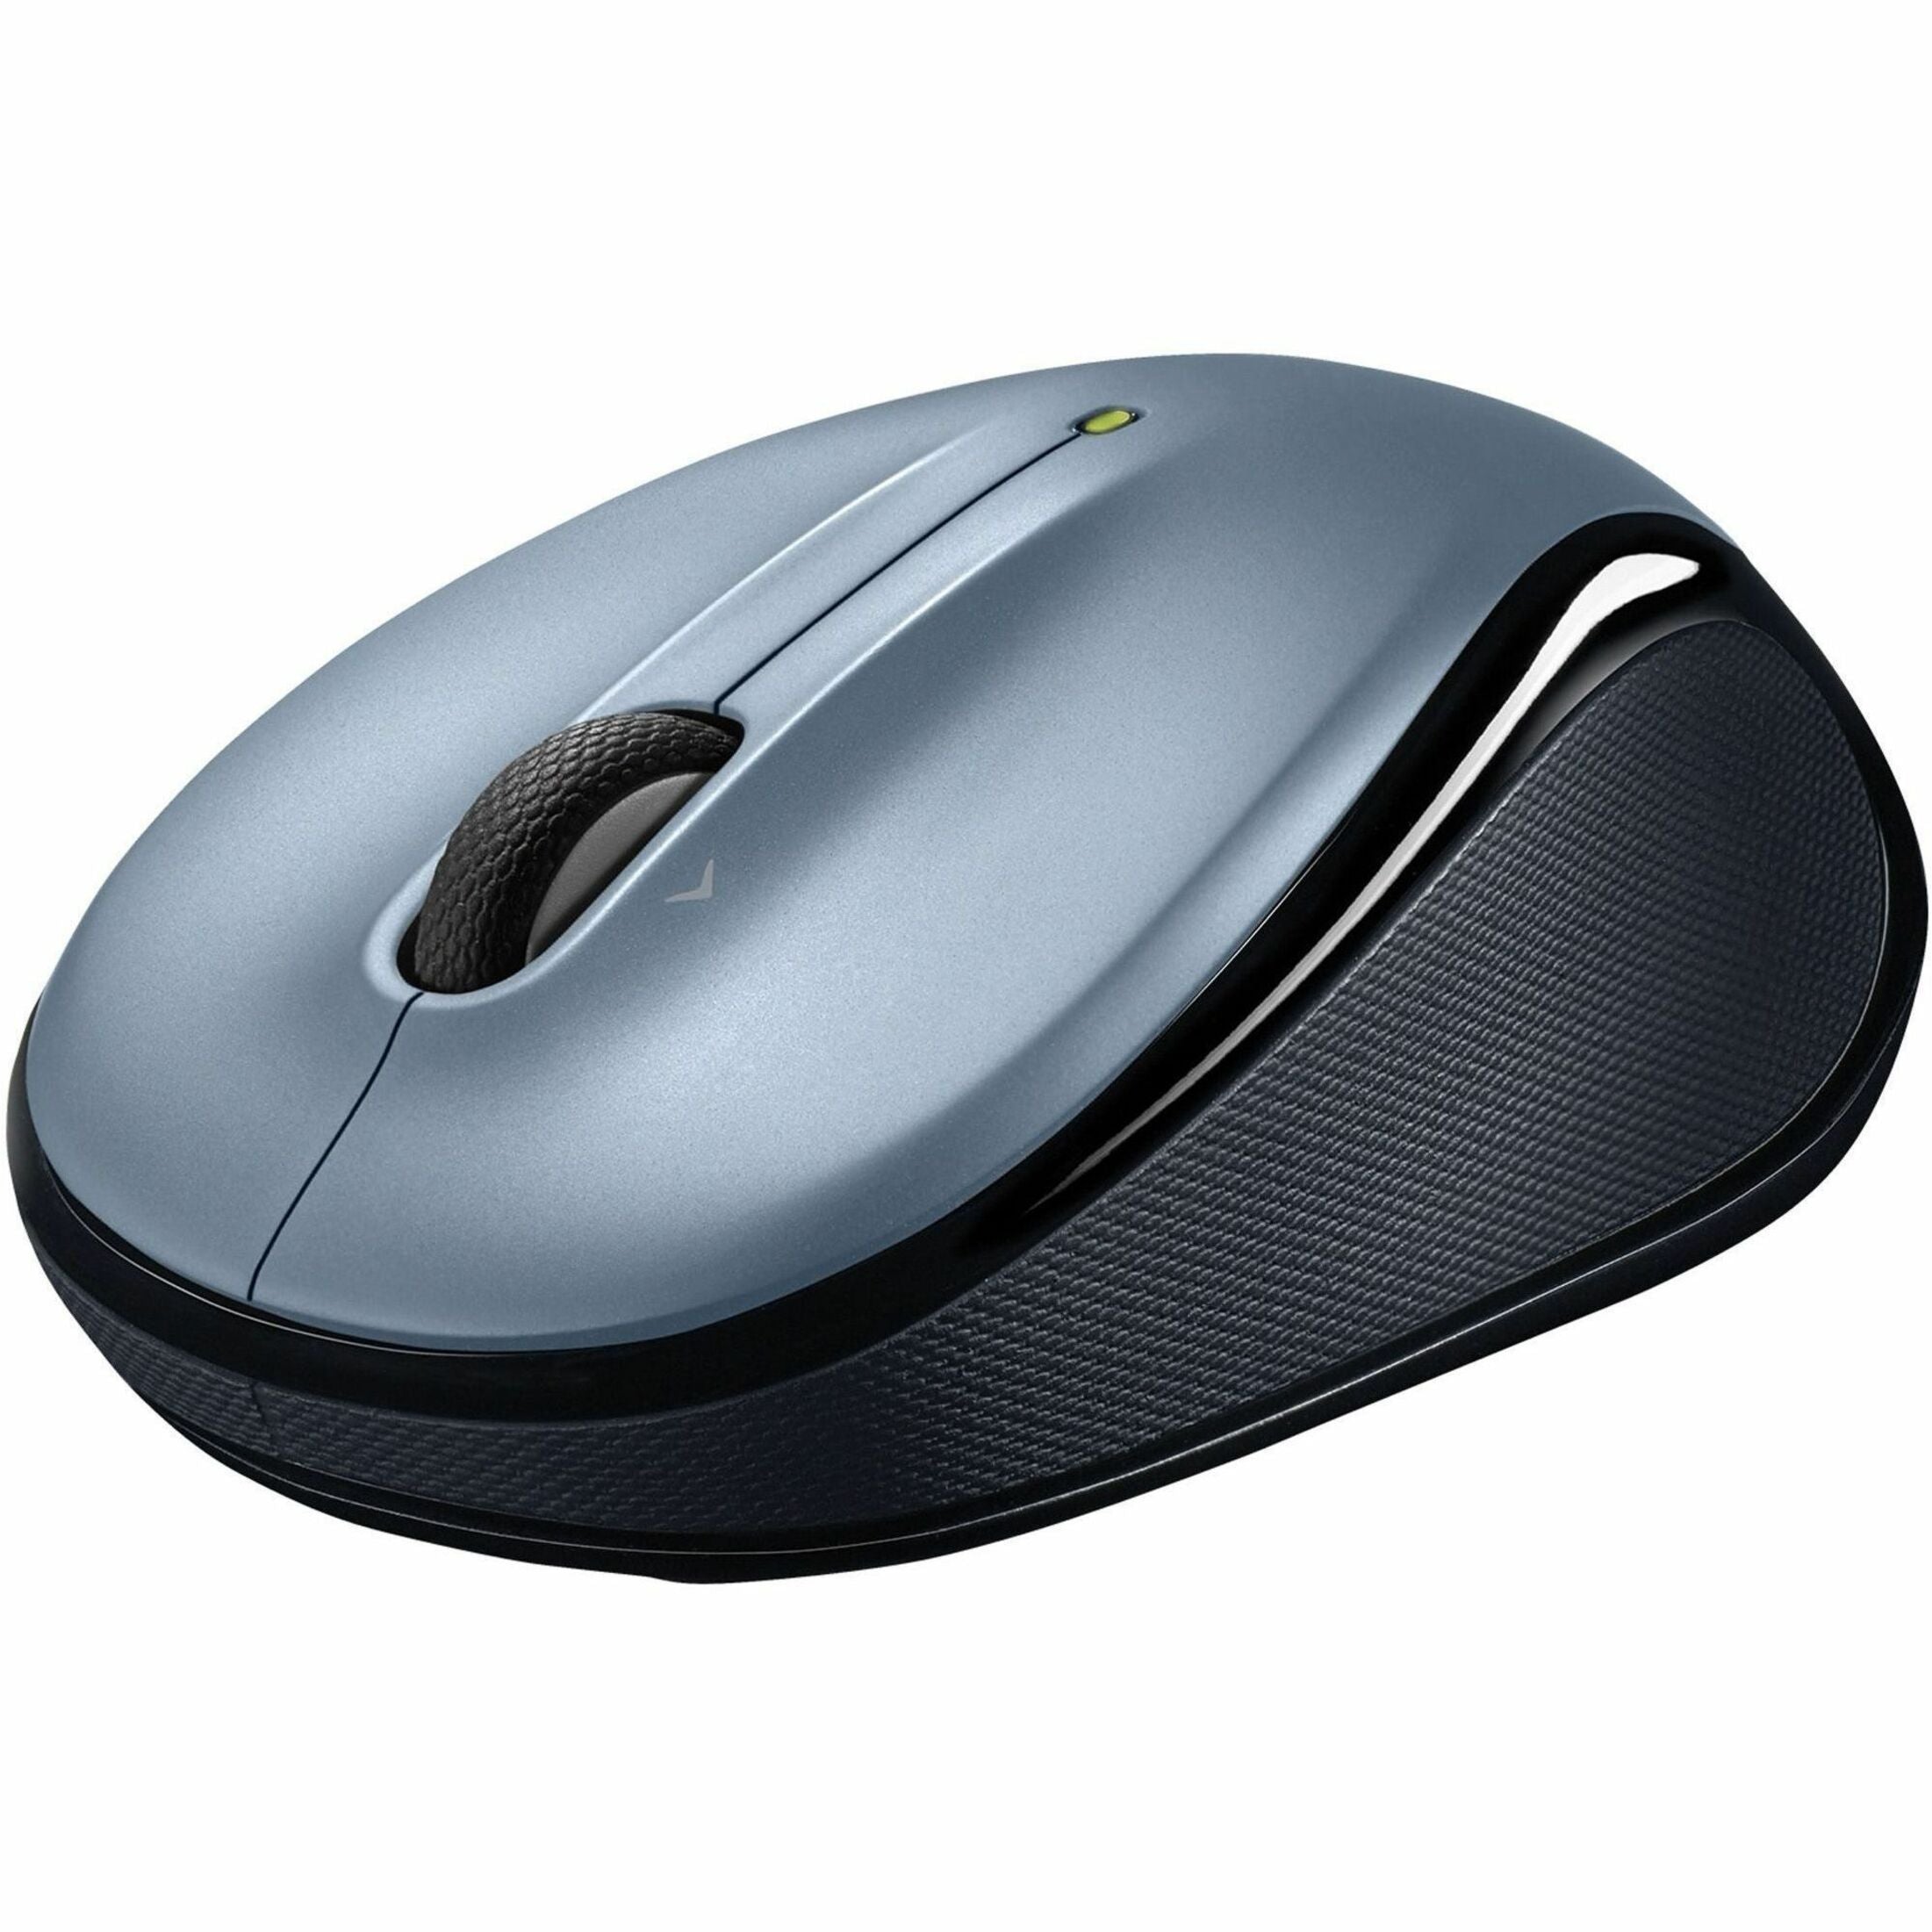 Logitech 910-006824 M325S Wireless Mouse, Small Size, 1000 dpi, 2.4 GHz, Silver